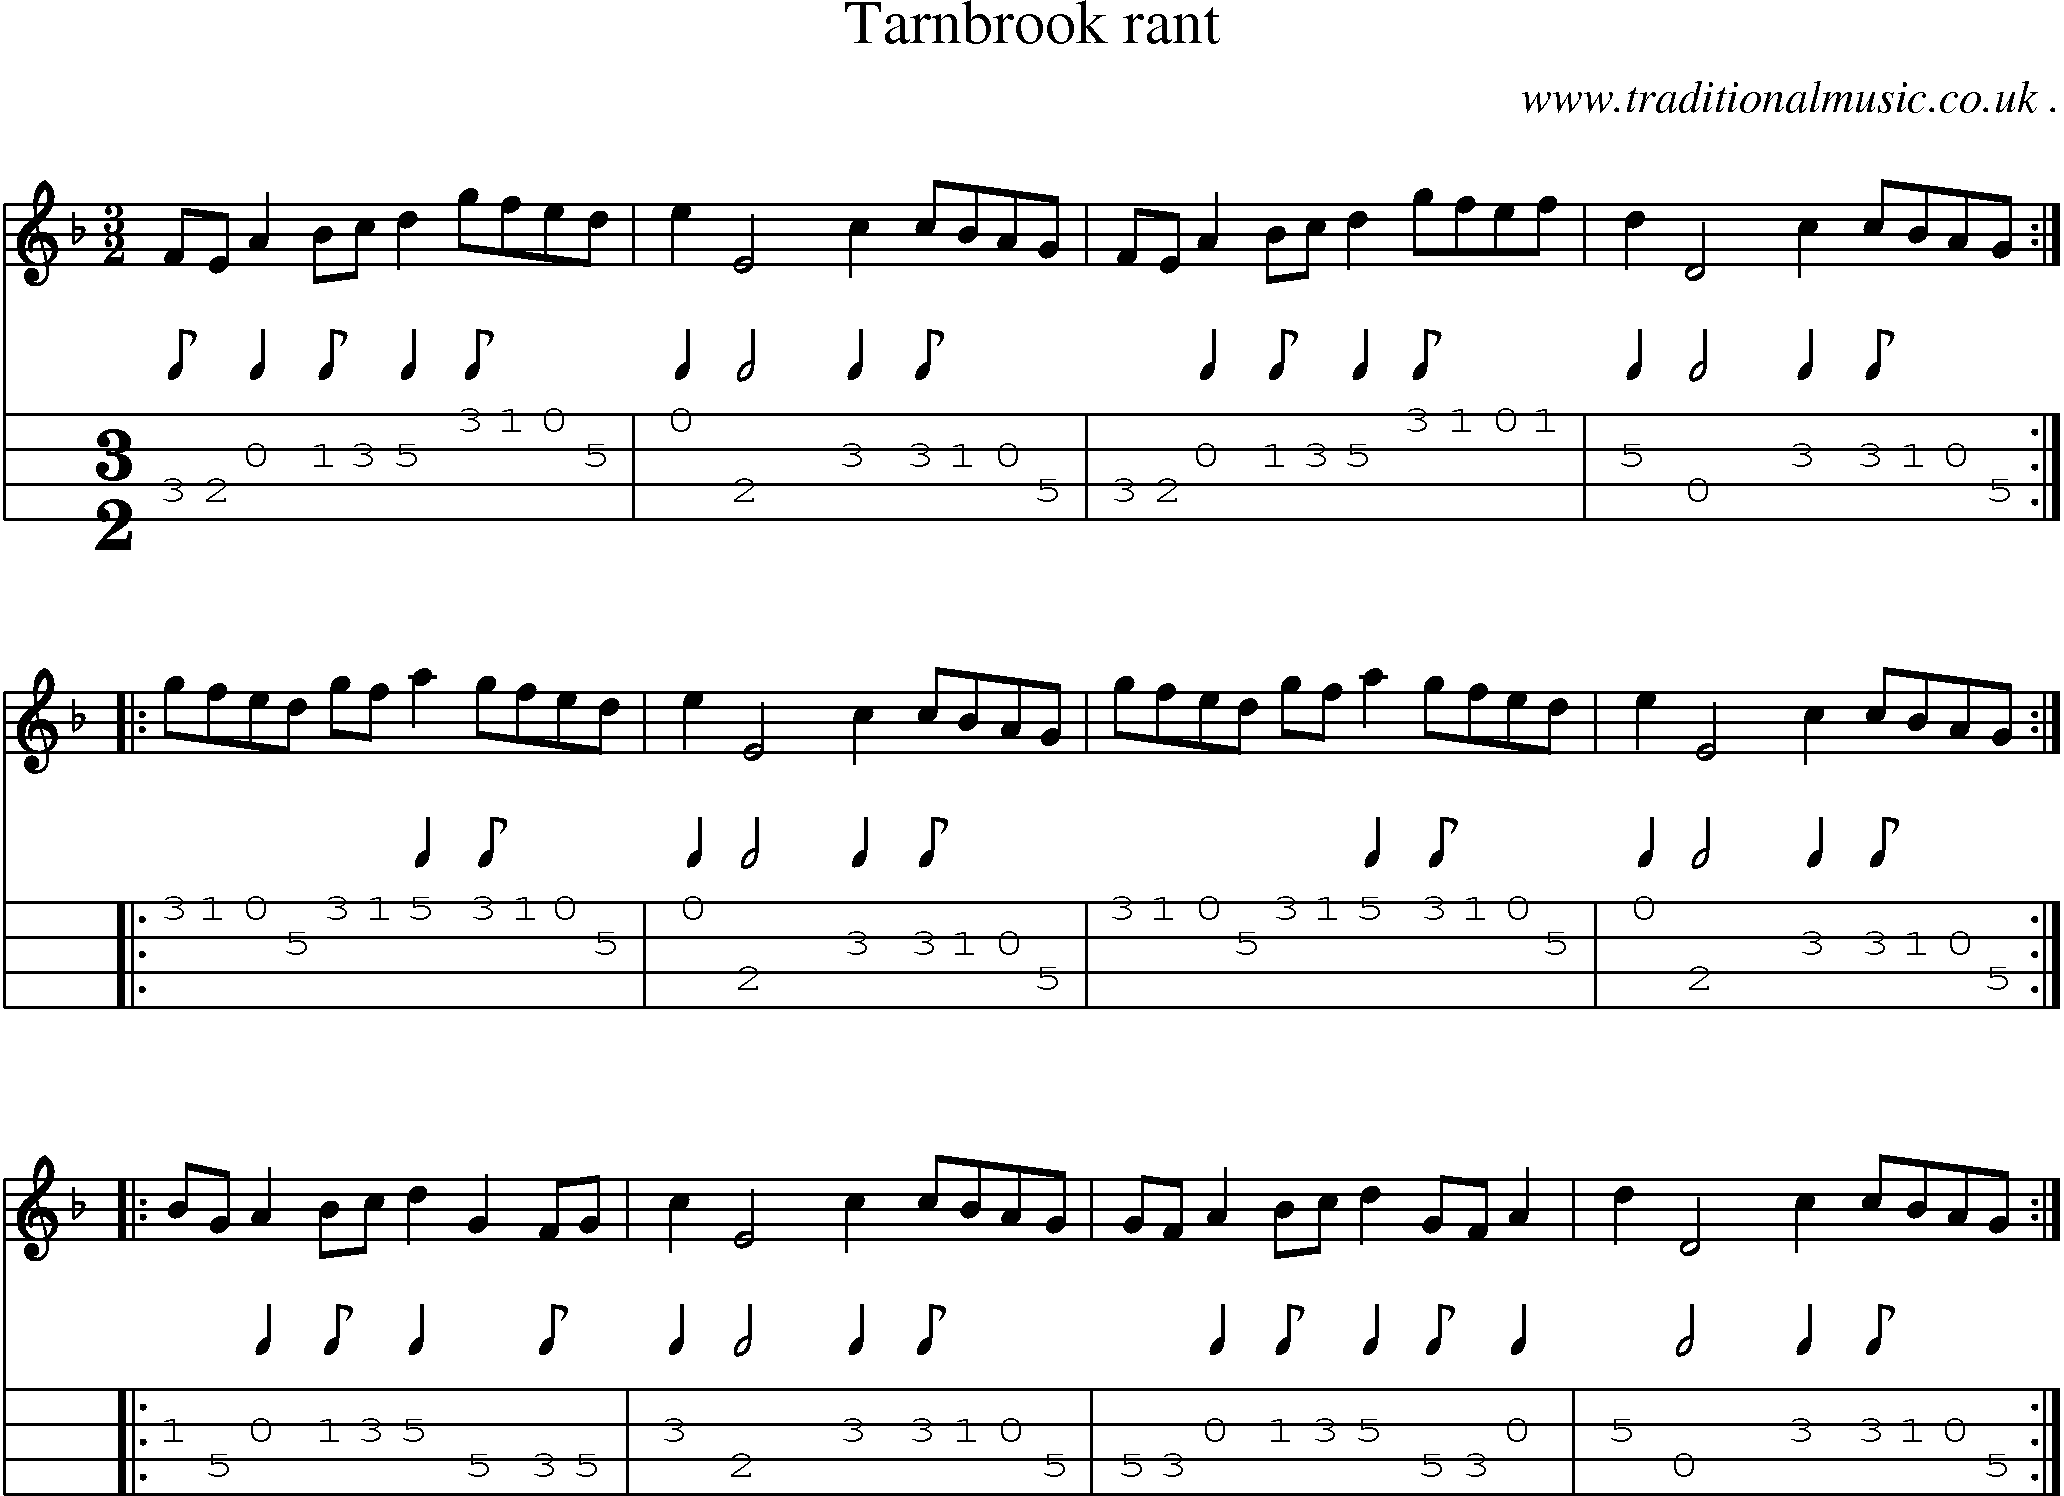 Sheet-Music and Mandolin Tabs for Tarnbrook Rant